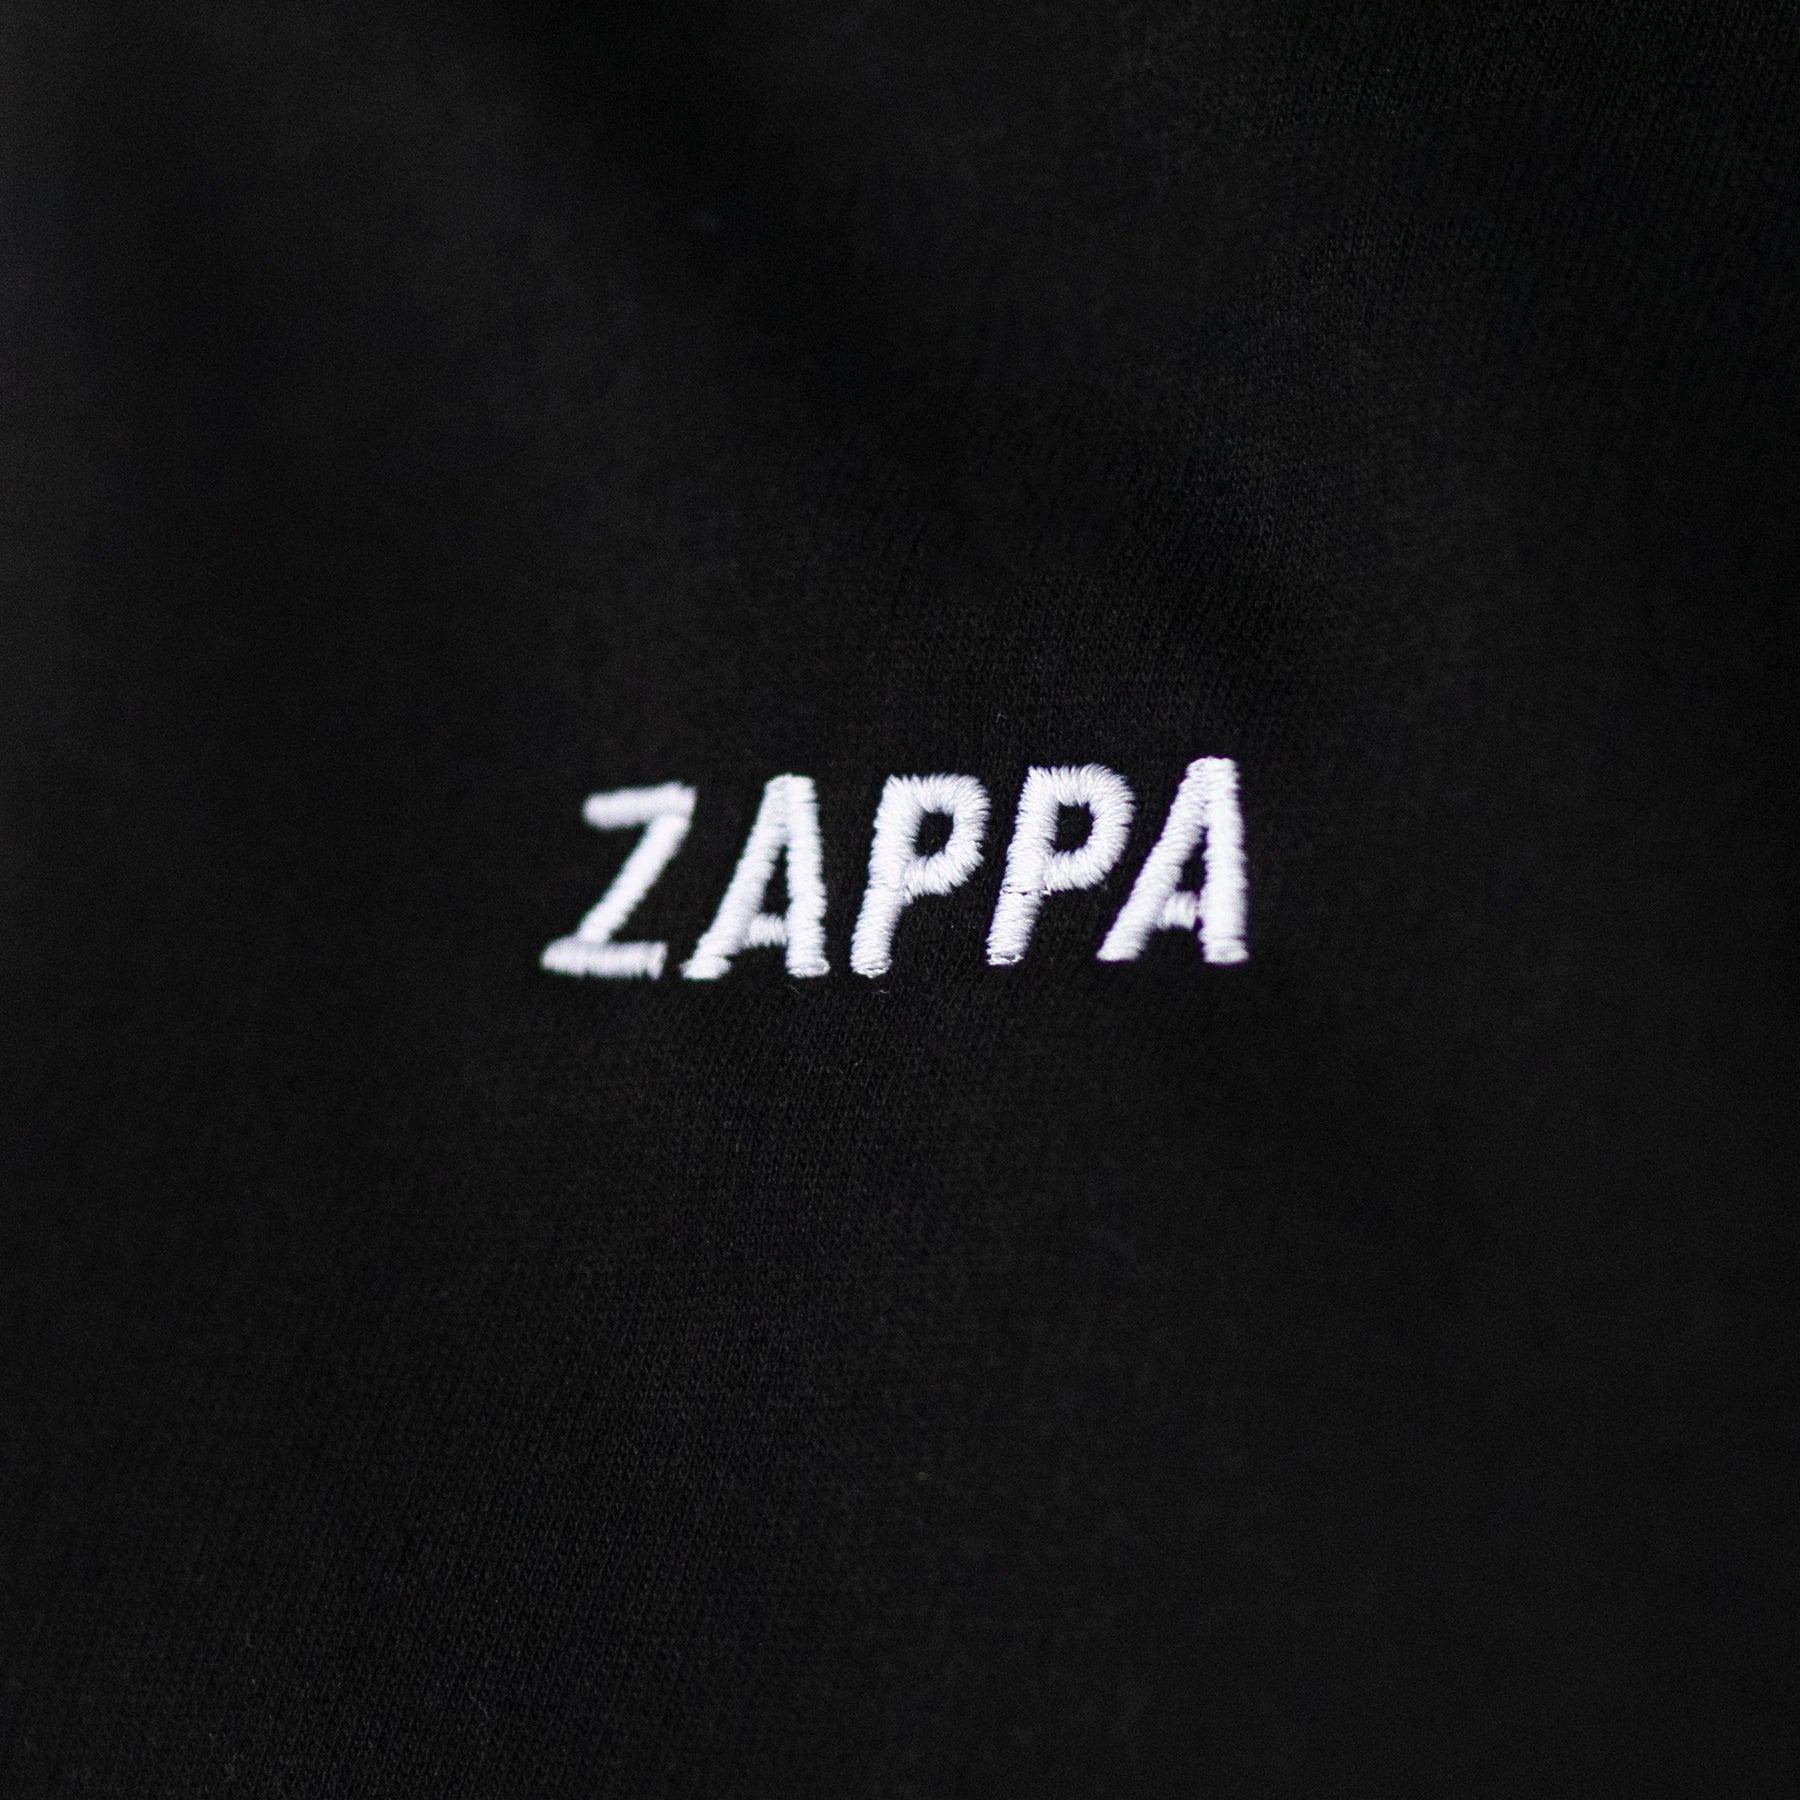 Zappa The Cat - Black T-shirt